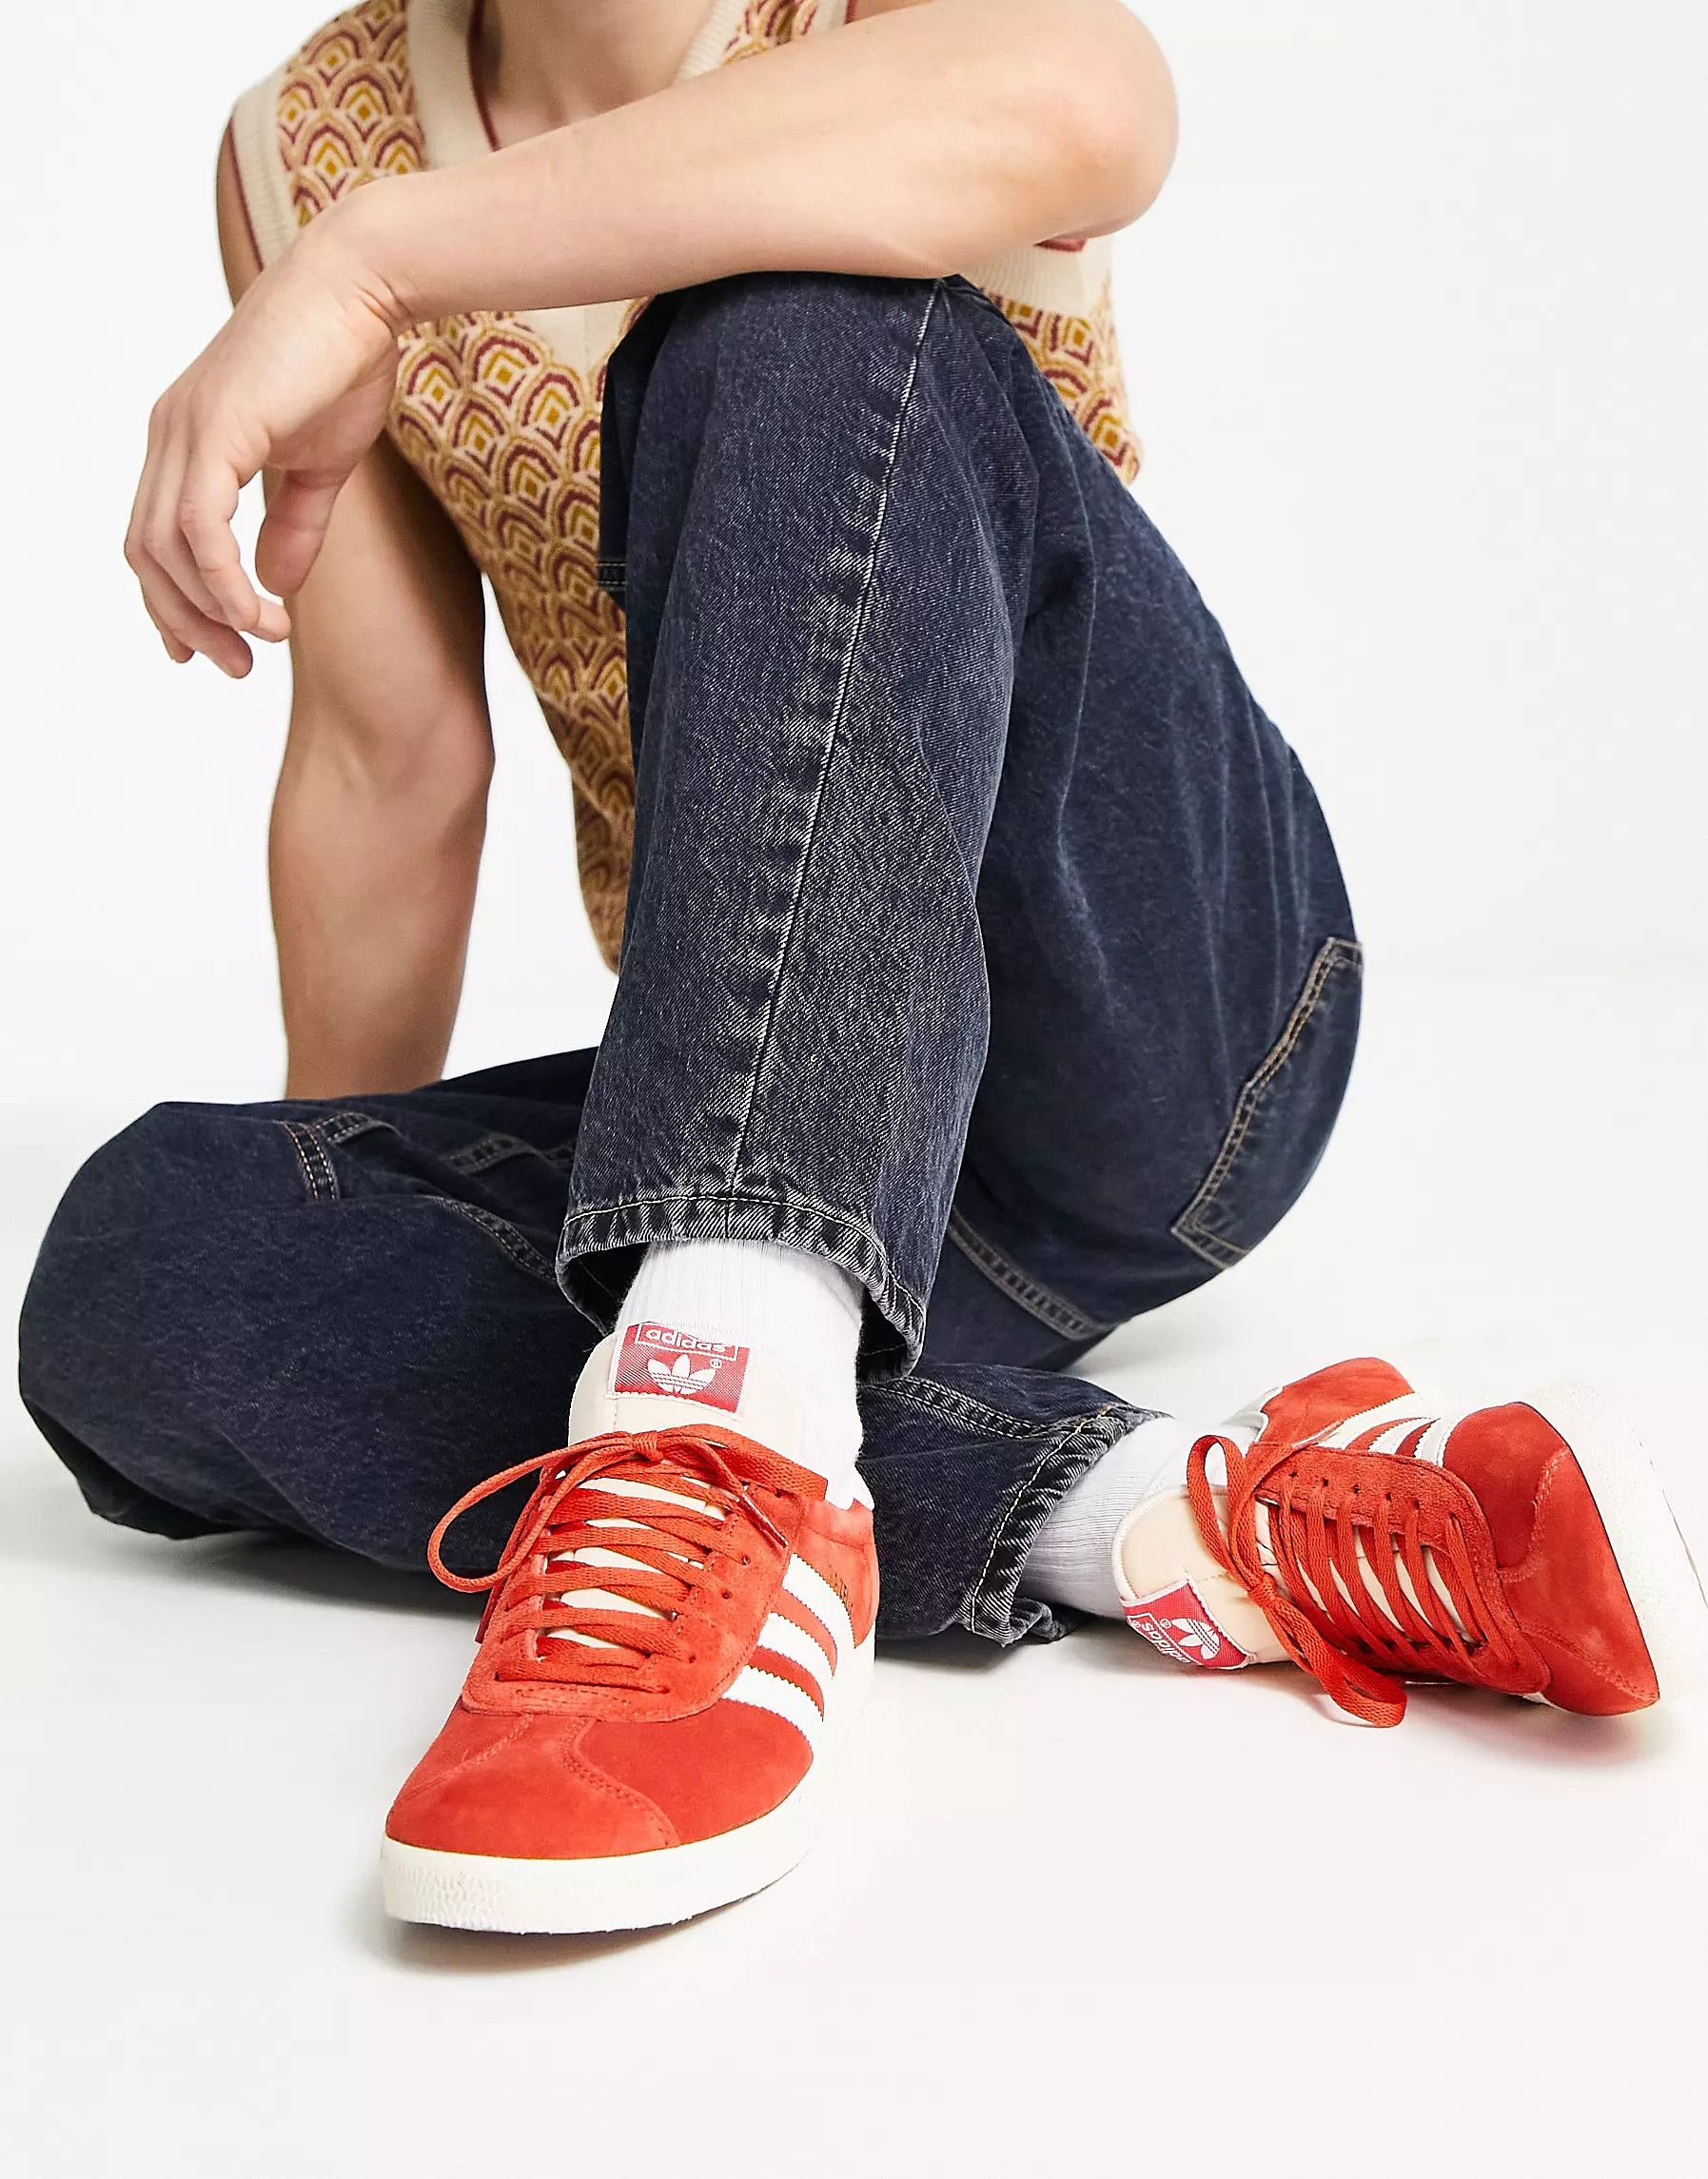 adidas Originals Gazelle sneakers in orange | ASOS (Global)